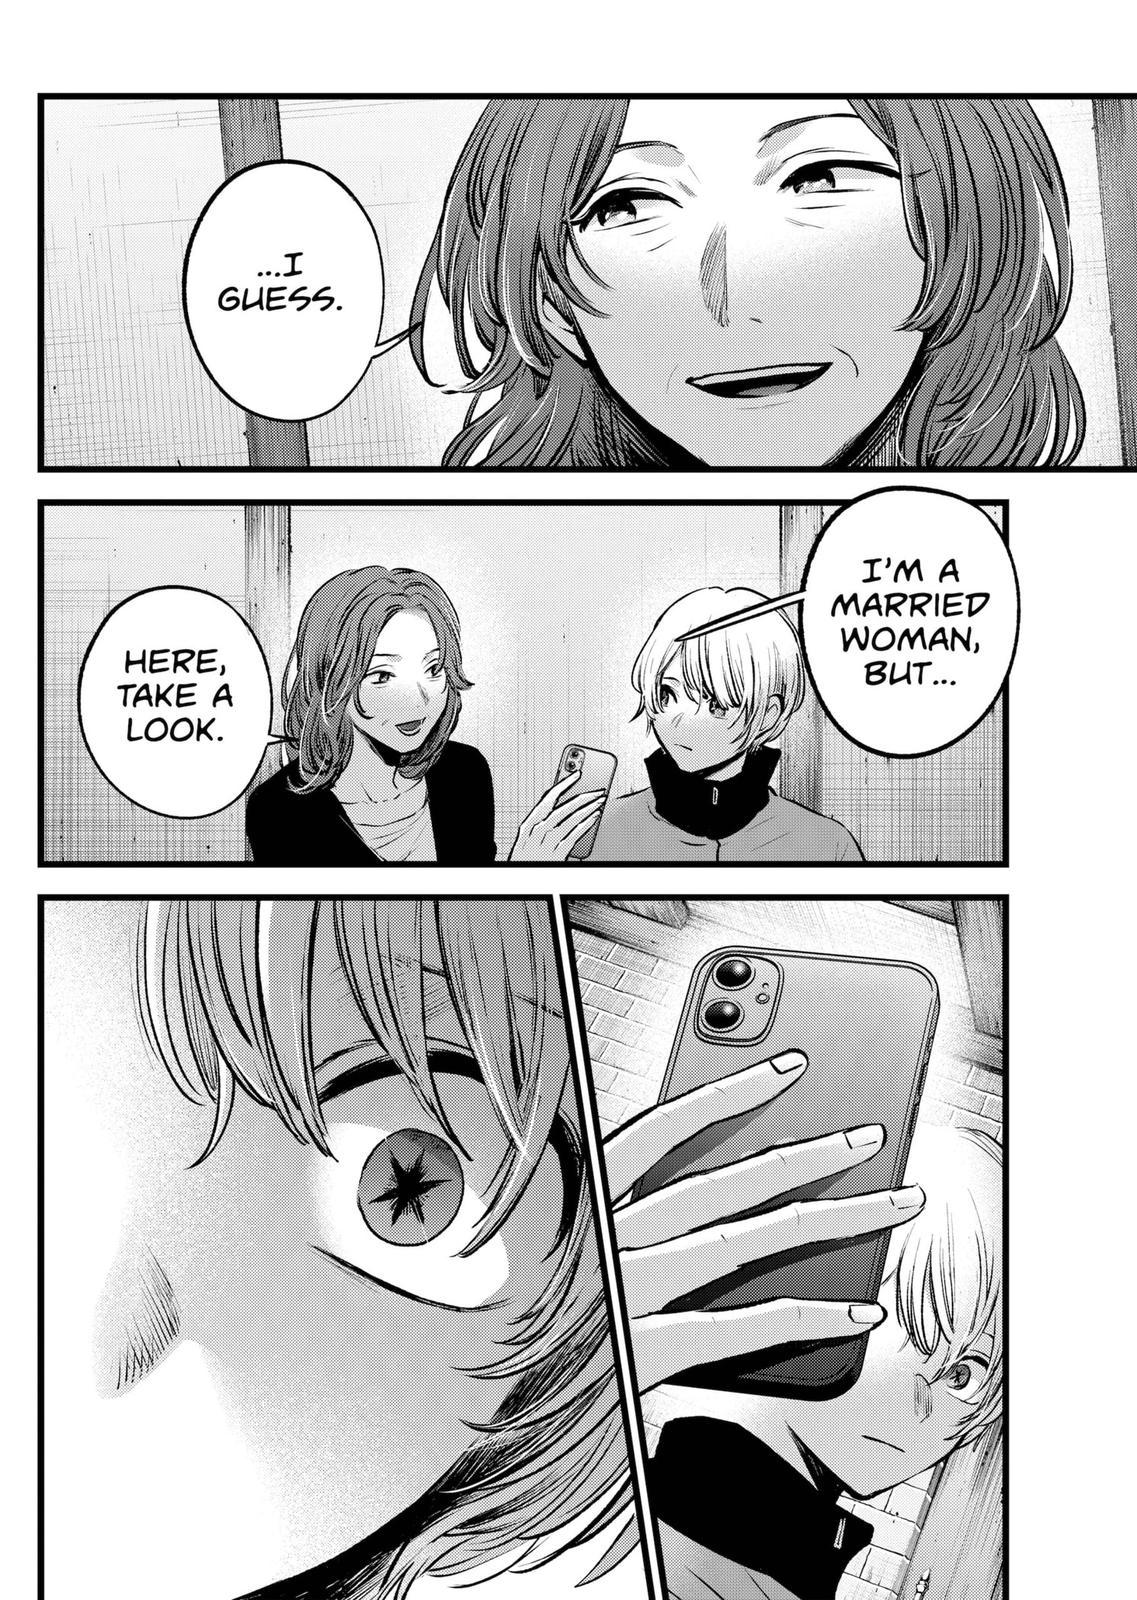 Oshi no Ko Manga, Chapter 119